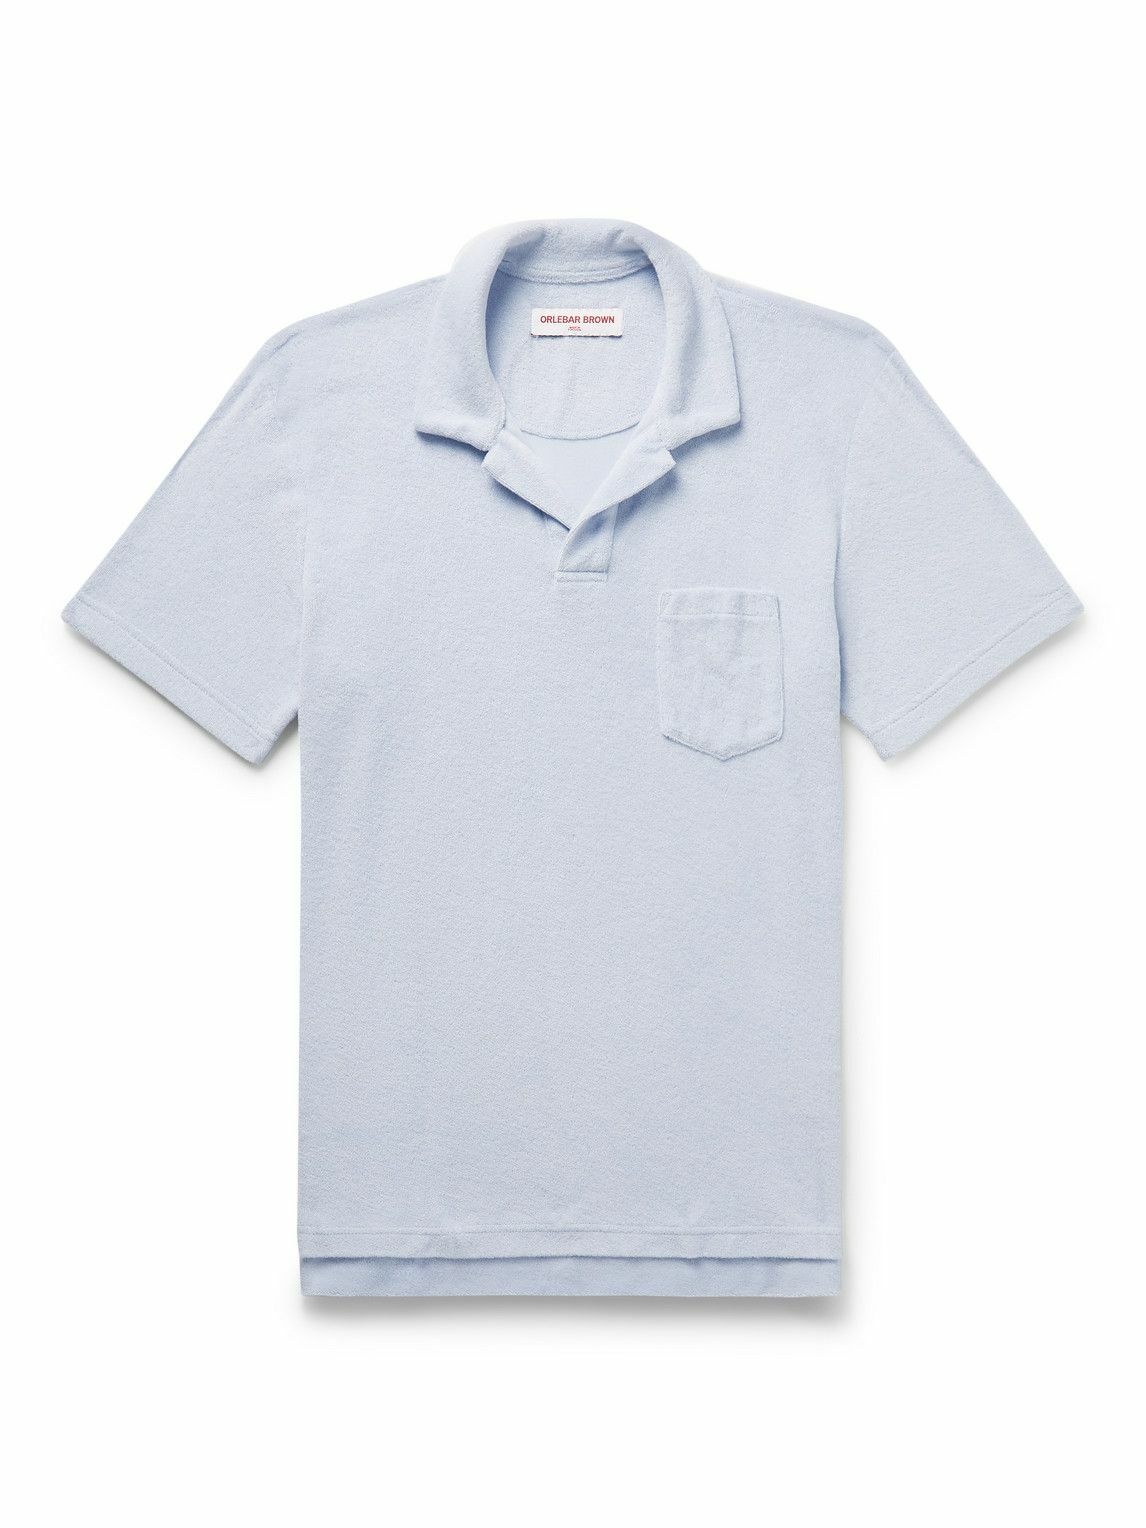 Orlebar Brown - Slim-Fit Cotton-Terry Polo Shirt - Blue Orlebar Brown